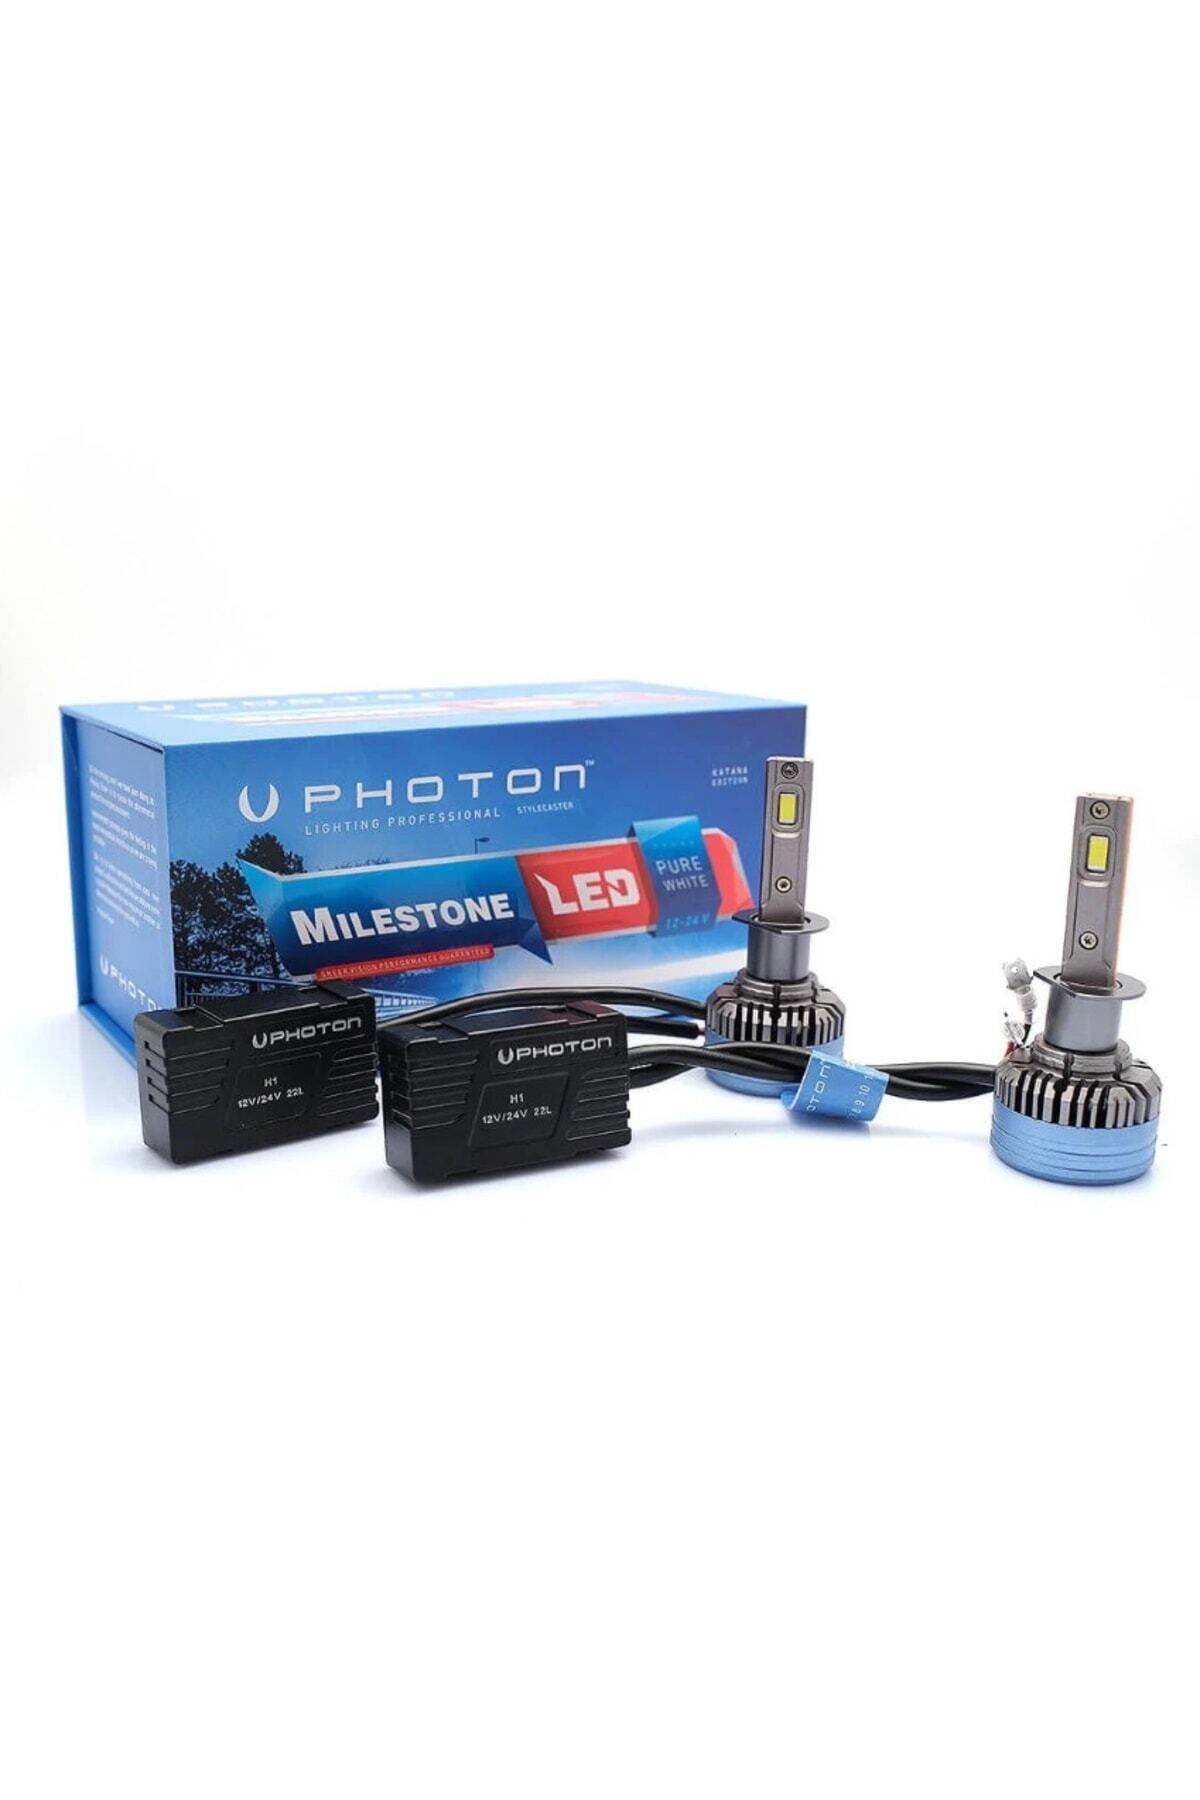 Photon Milestone Serisi Katana Edition H1 Led Headlight Ml2651